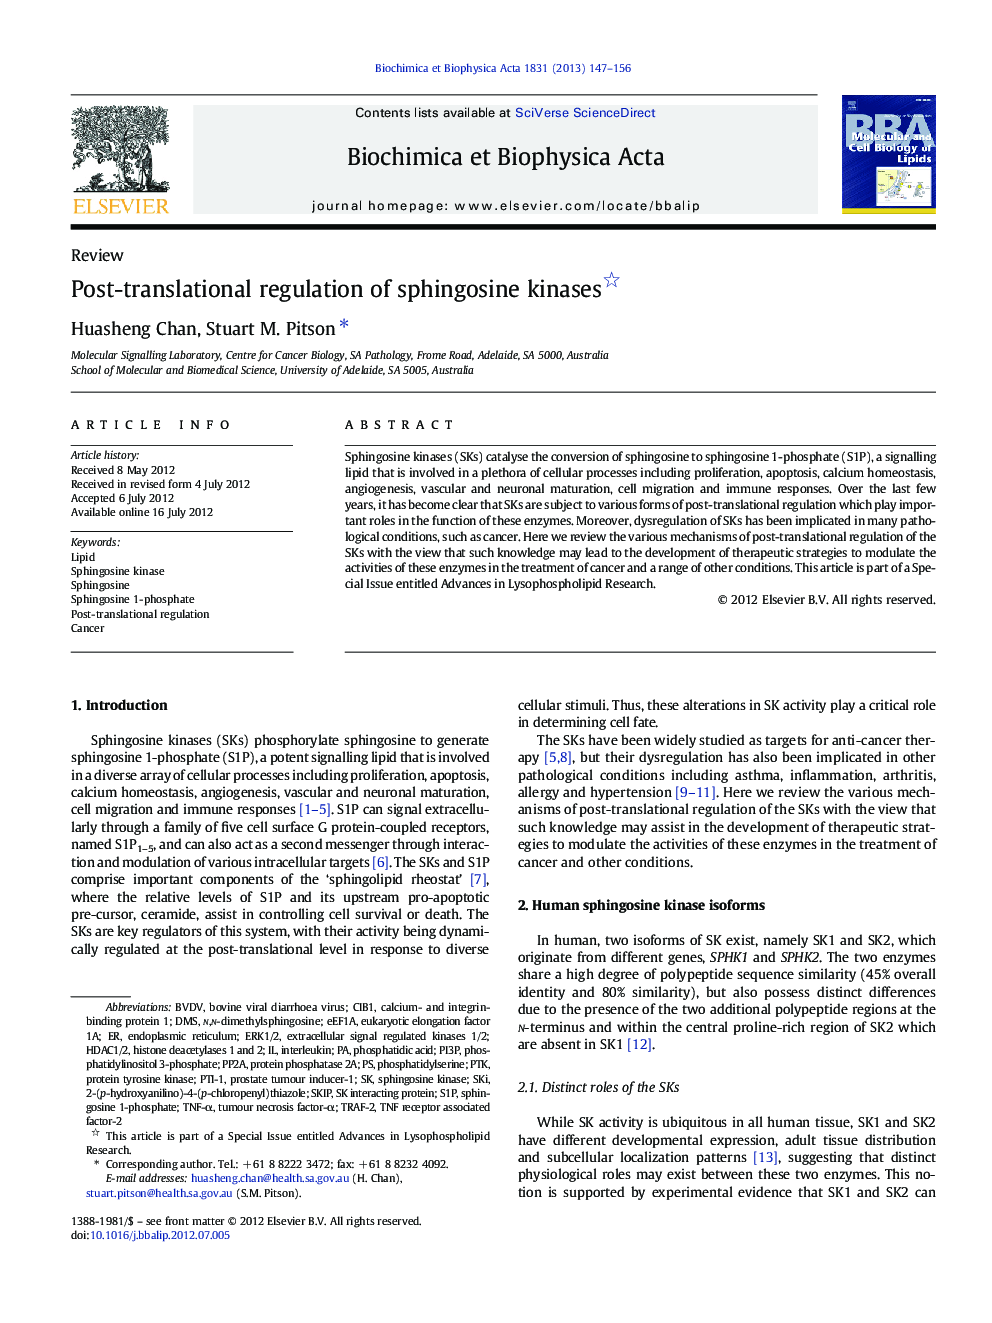 Post-translational regulation of sphingosine kinases 